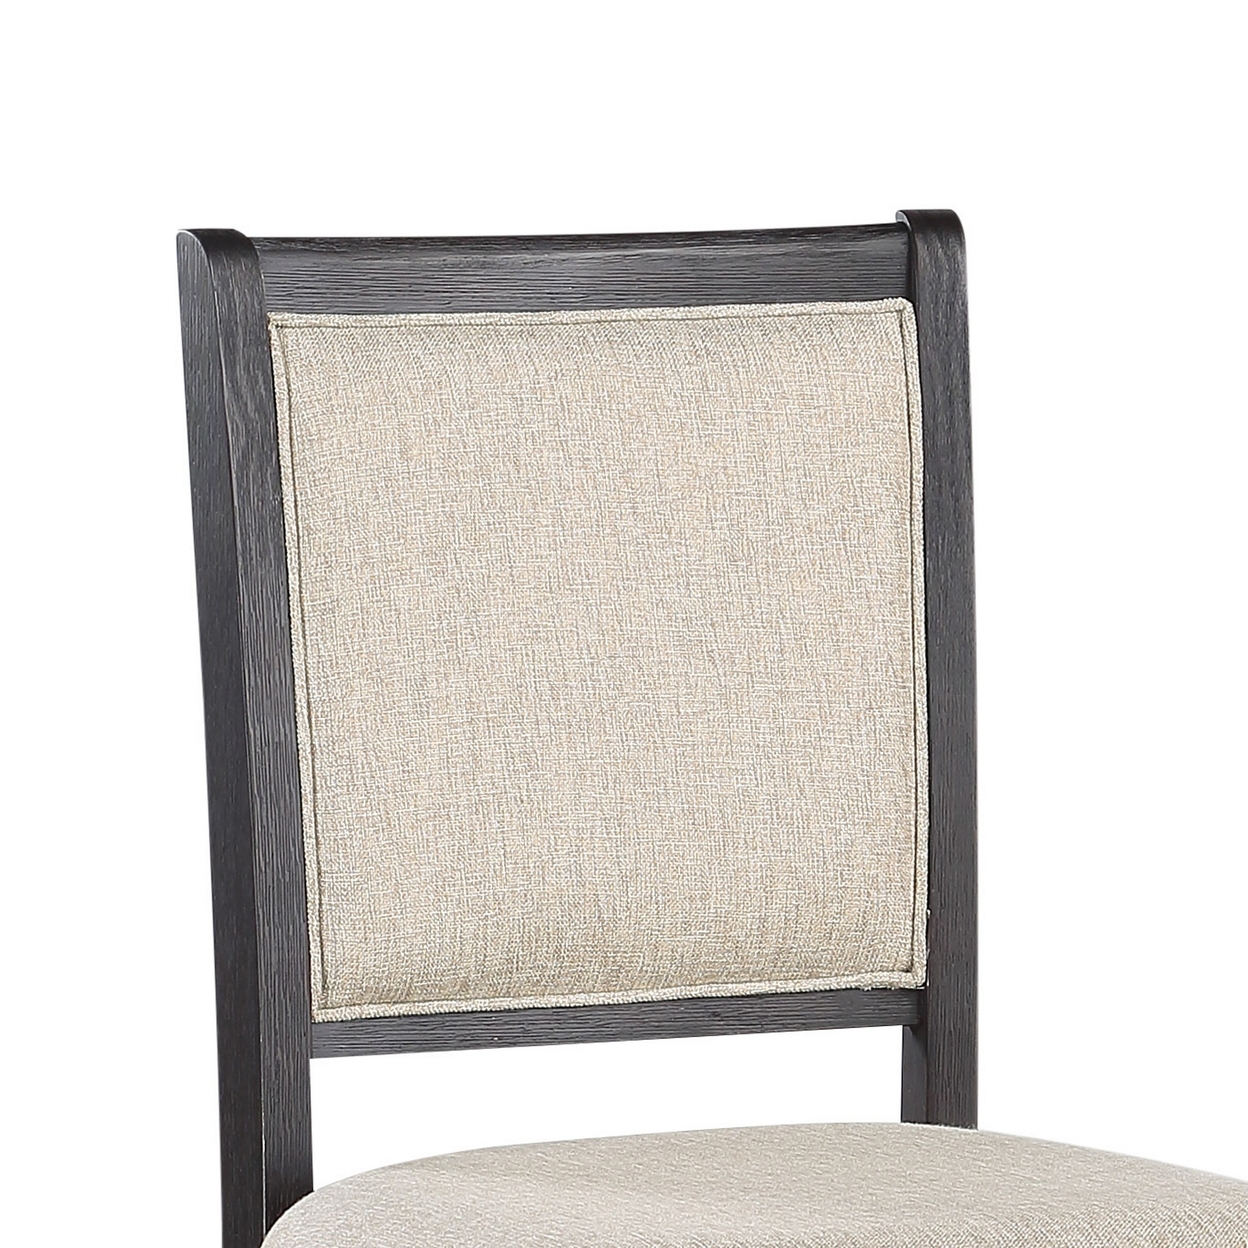 Anji 26 Inch Counter Chair, Jet Black Wood Frame, Piped Stitching, Beige- Saltoro Sherpi